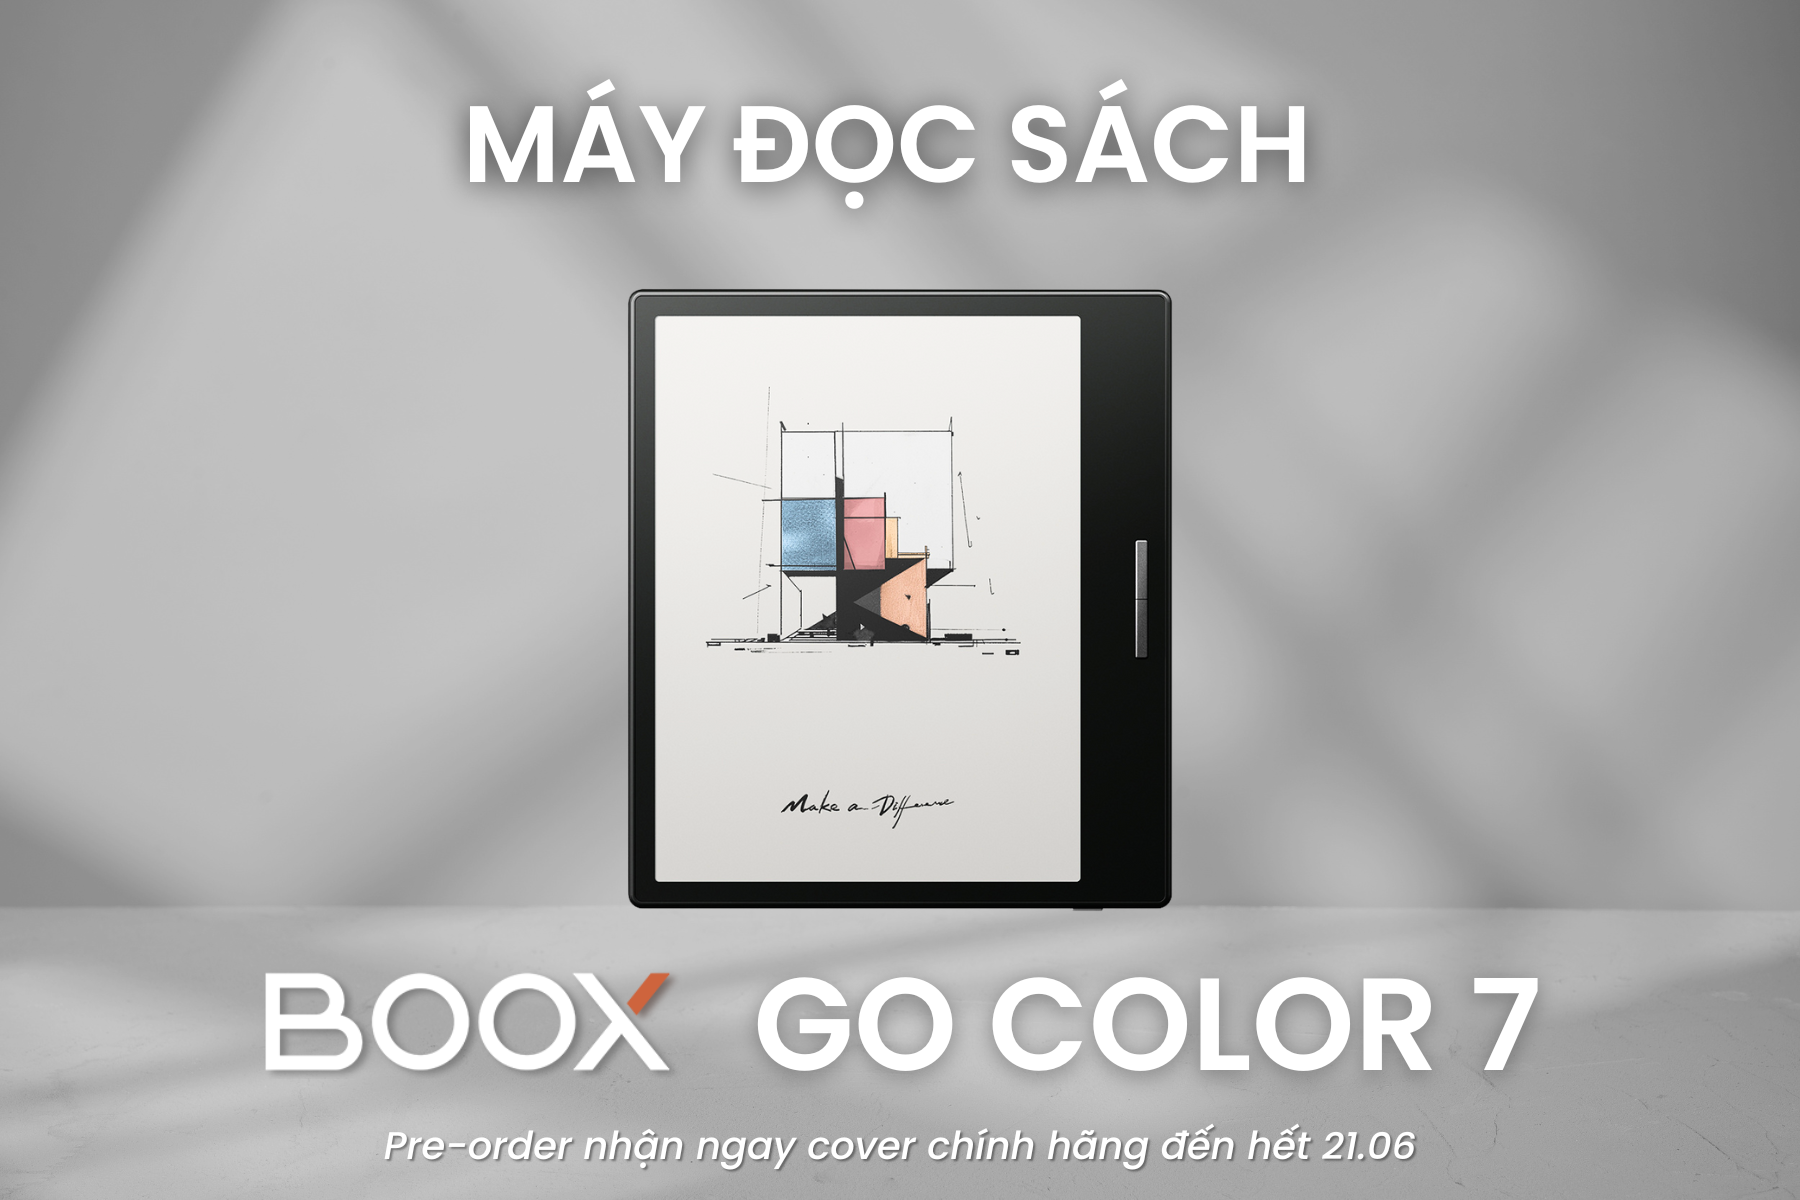 Pre-order Boox Go Color 7 nhận ngay ưu đãi